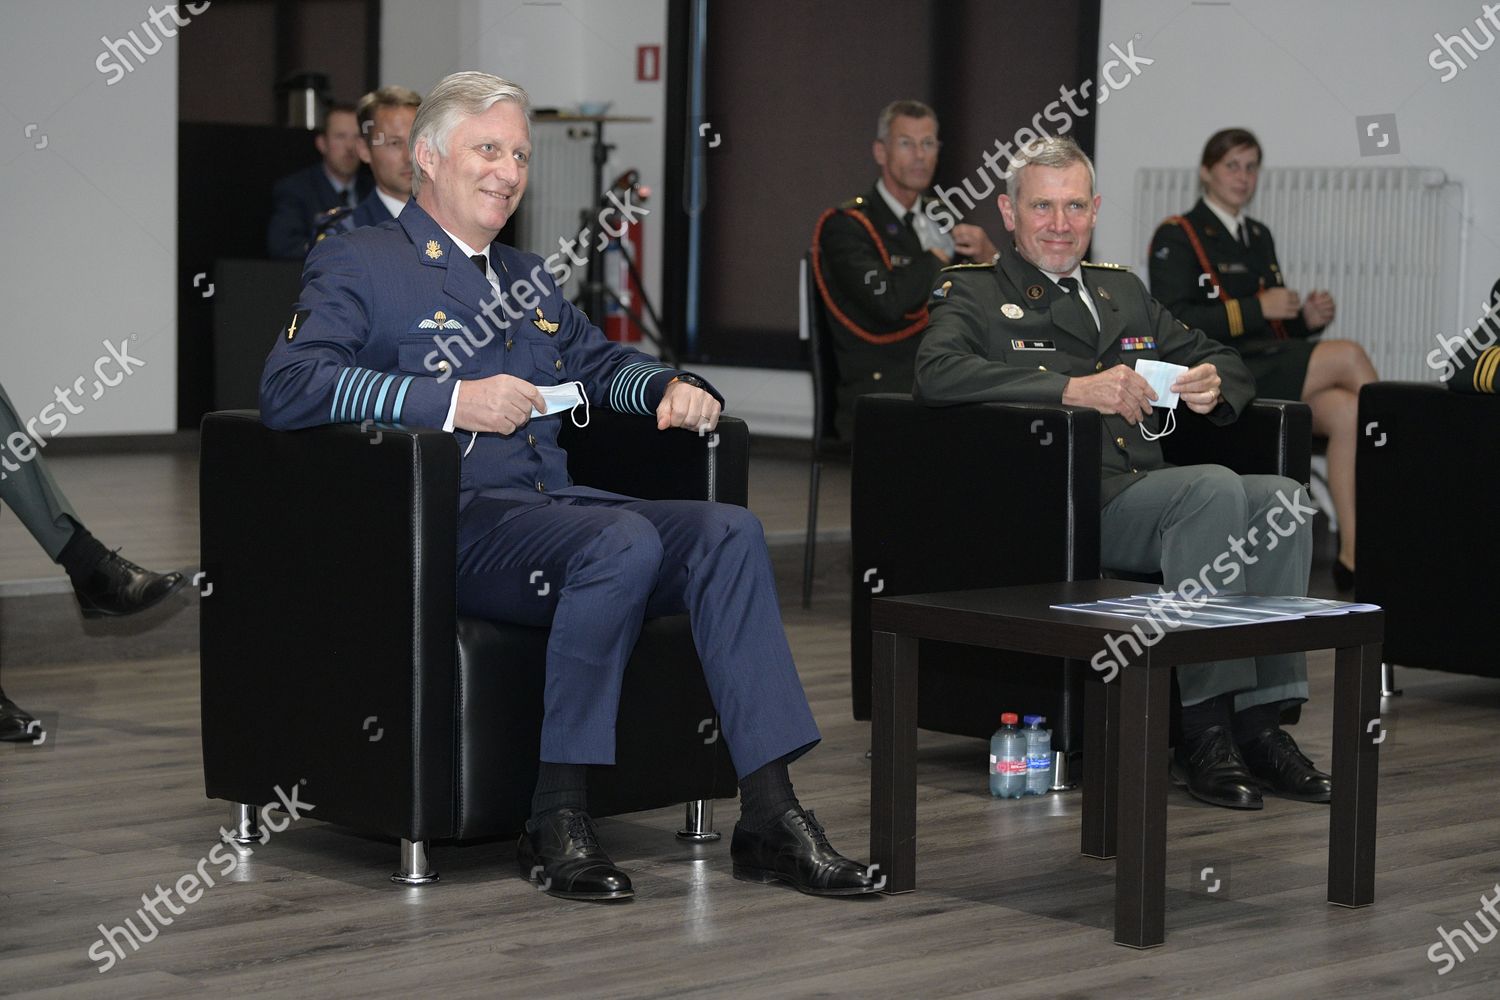 royals-defence-military-base-visit-peer-belgium-shutterstock-editorial-10689667b.jpg